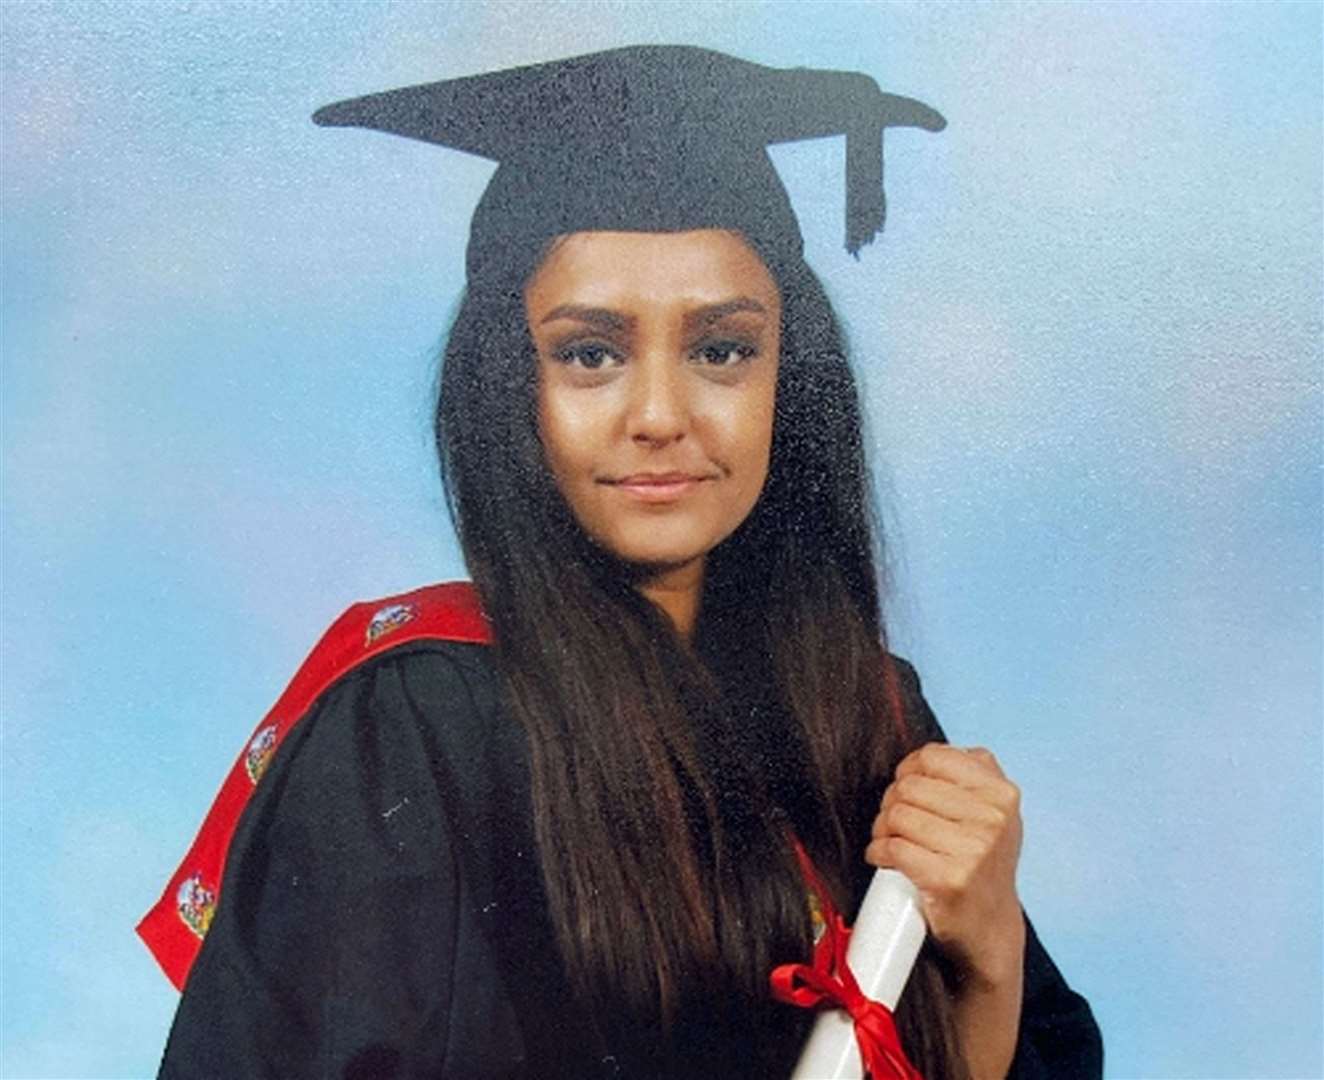 Sabina Nessa was killed by sexual predator Koci Selamaj in 2021 (Family handout/PA)